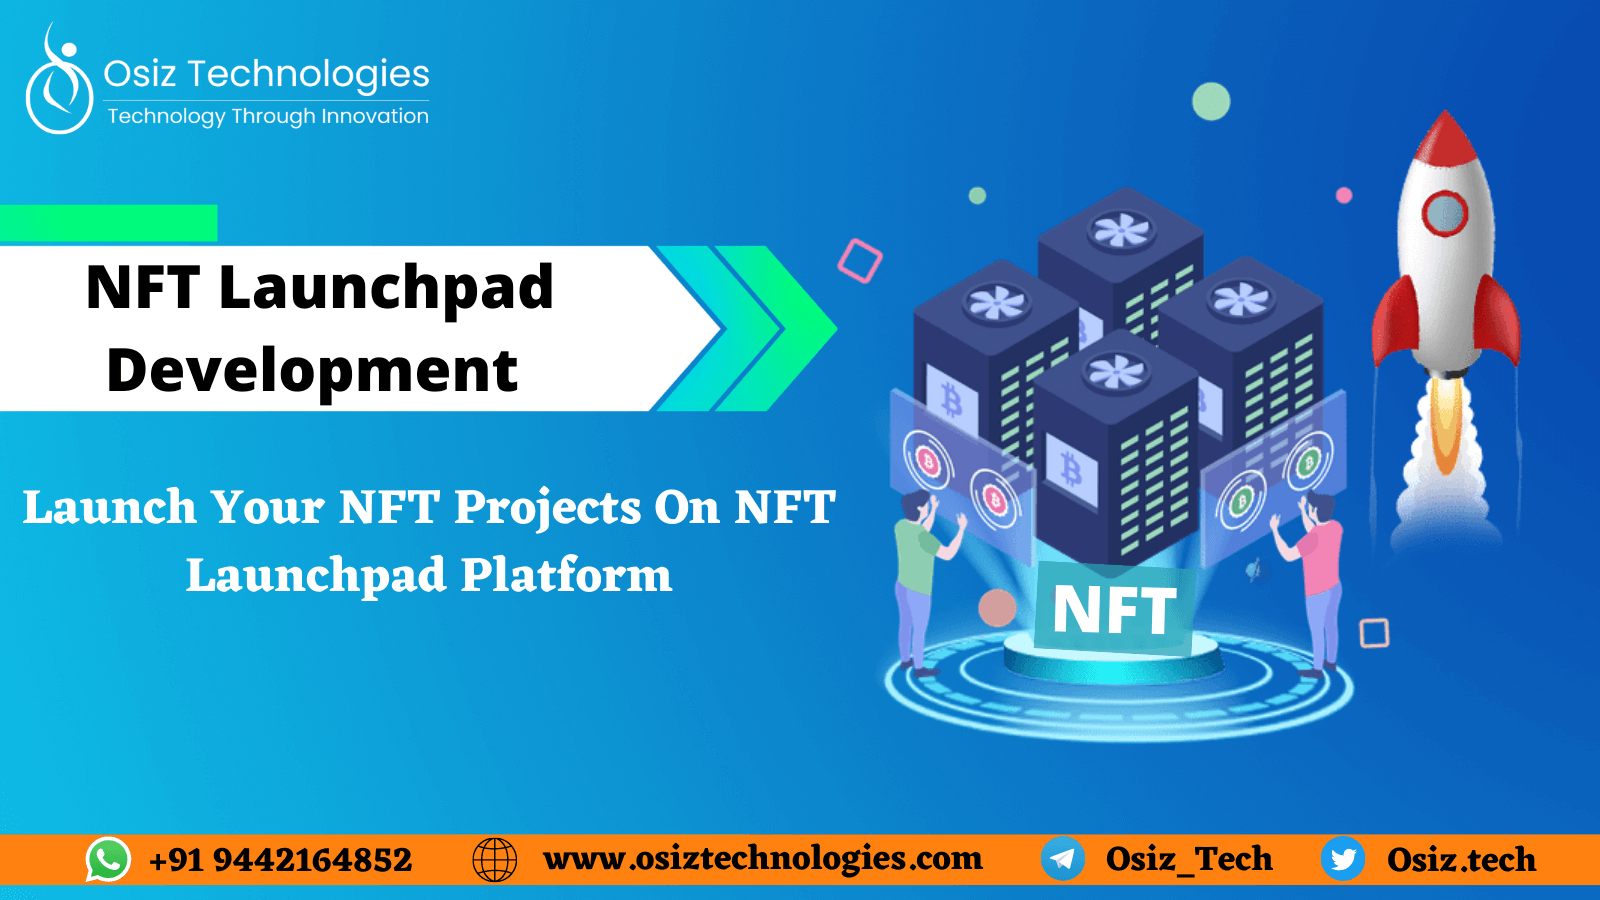 NFT Launchpad Development  Company - Osiz Technologies